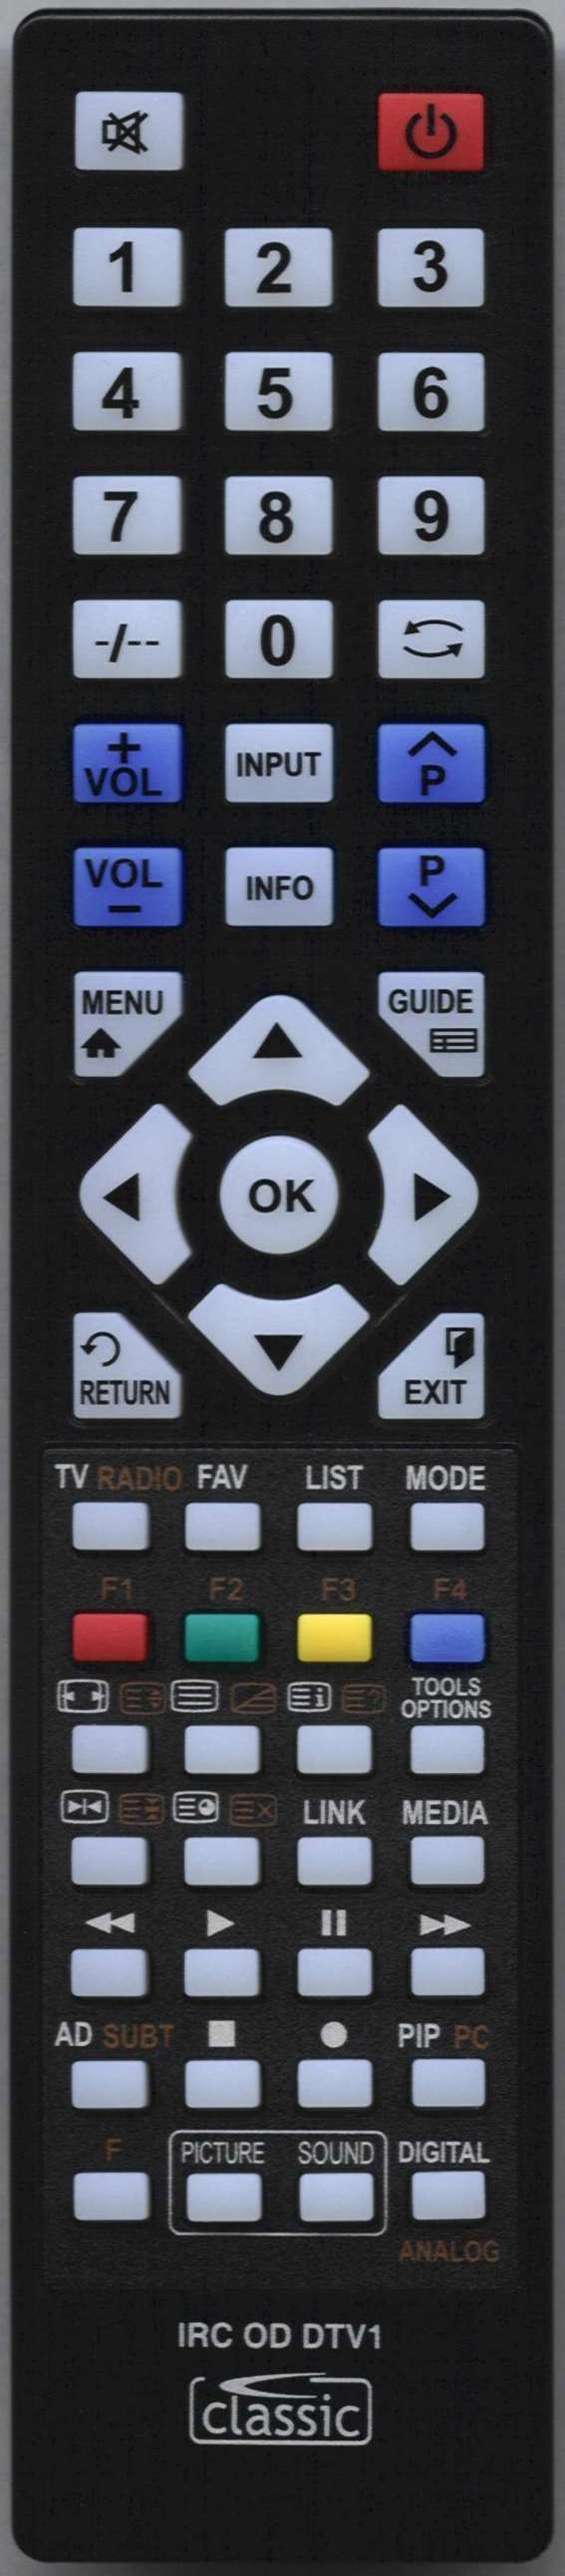 SONY KDFE50A12U Remote Control